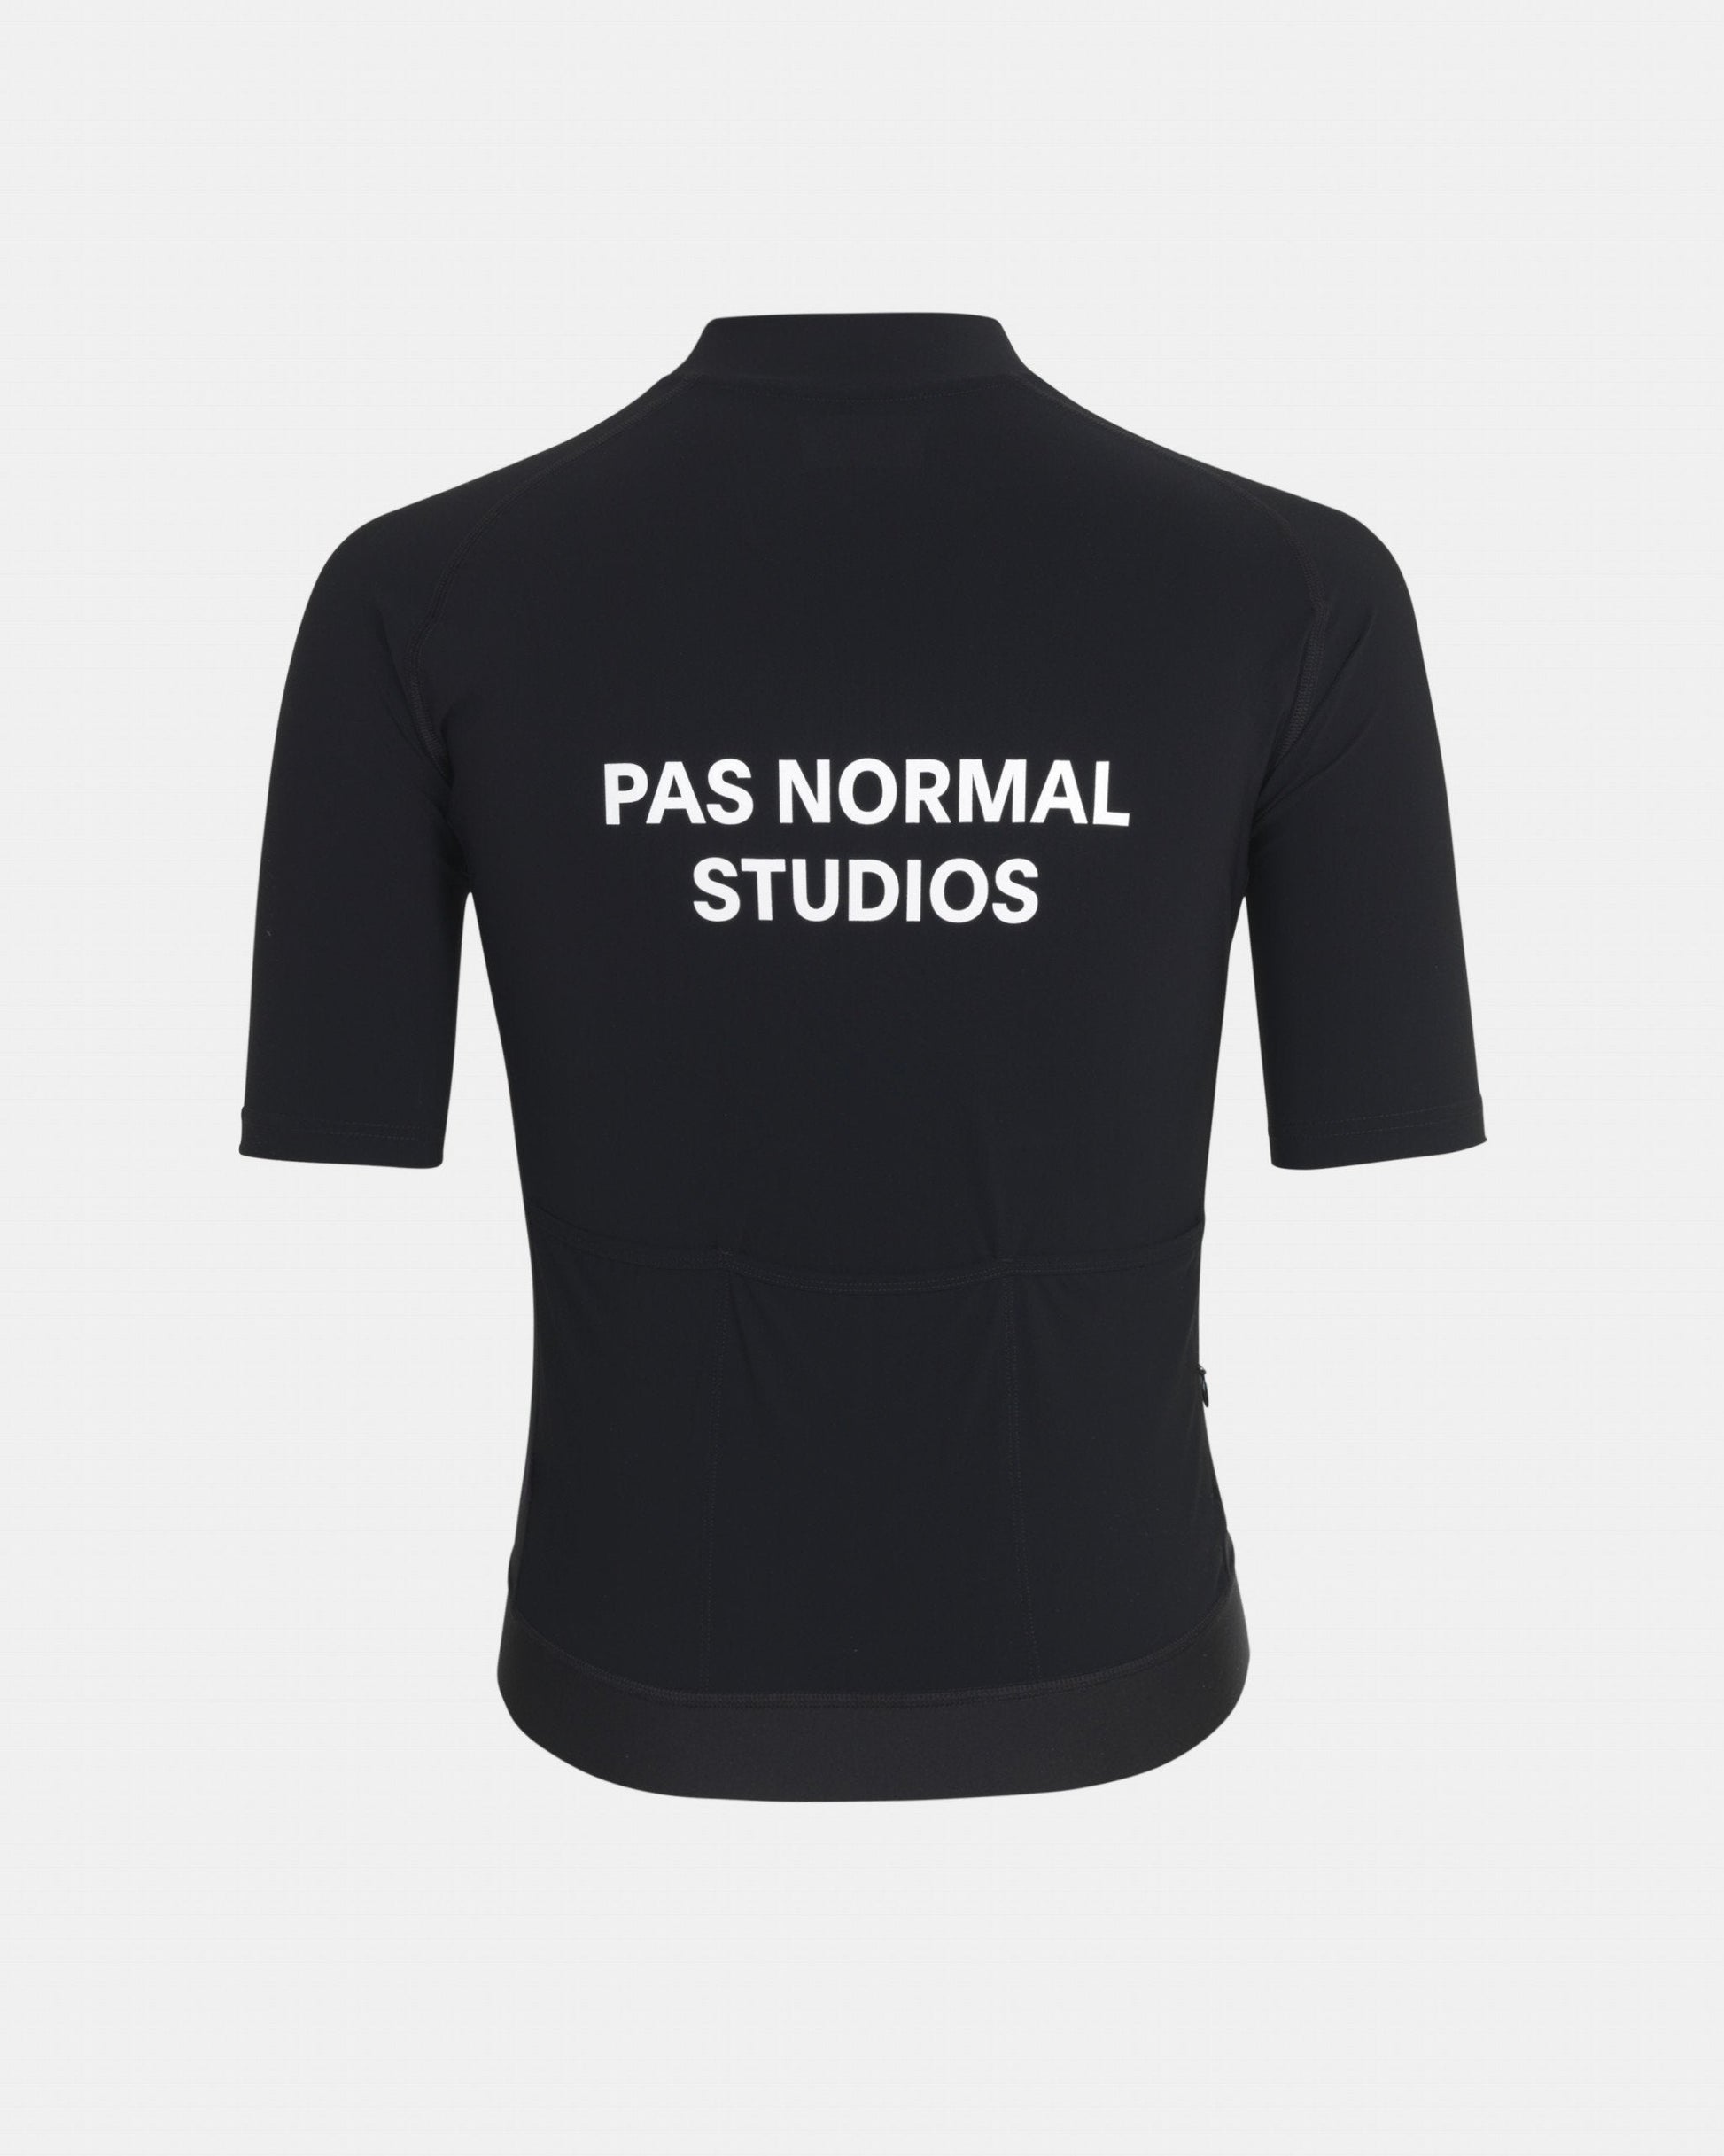 Pas Normal Studios - Maillot Essential Homme Pas Normal Studios 